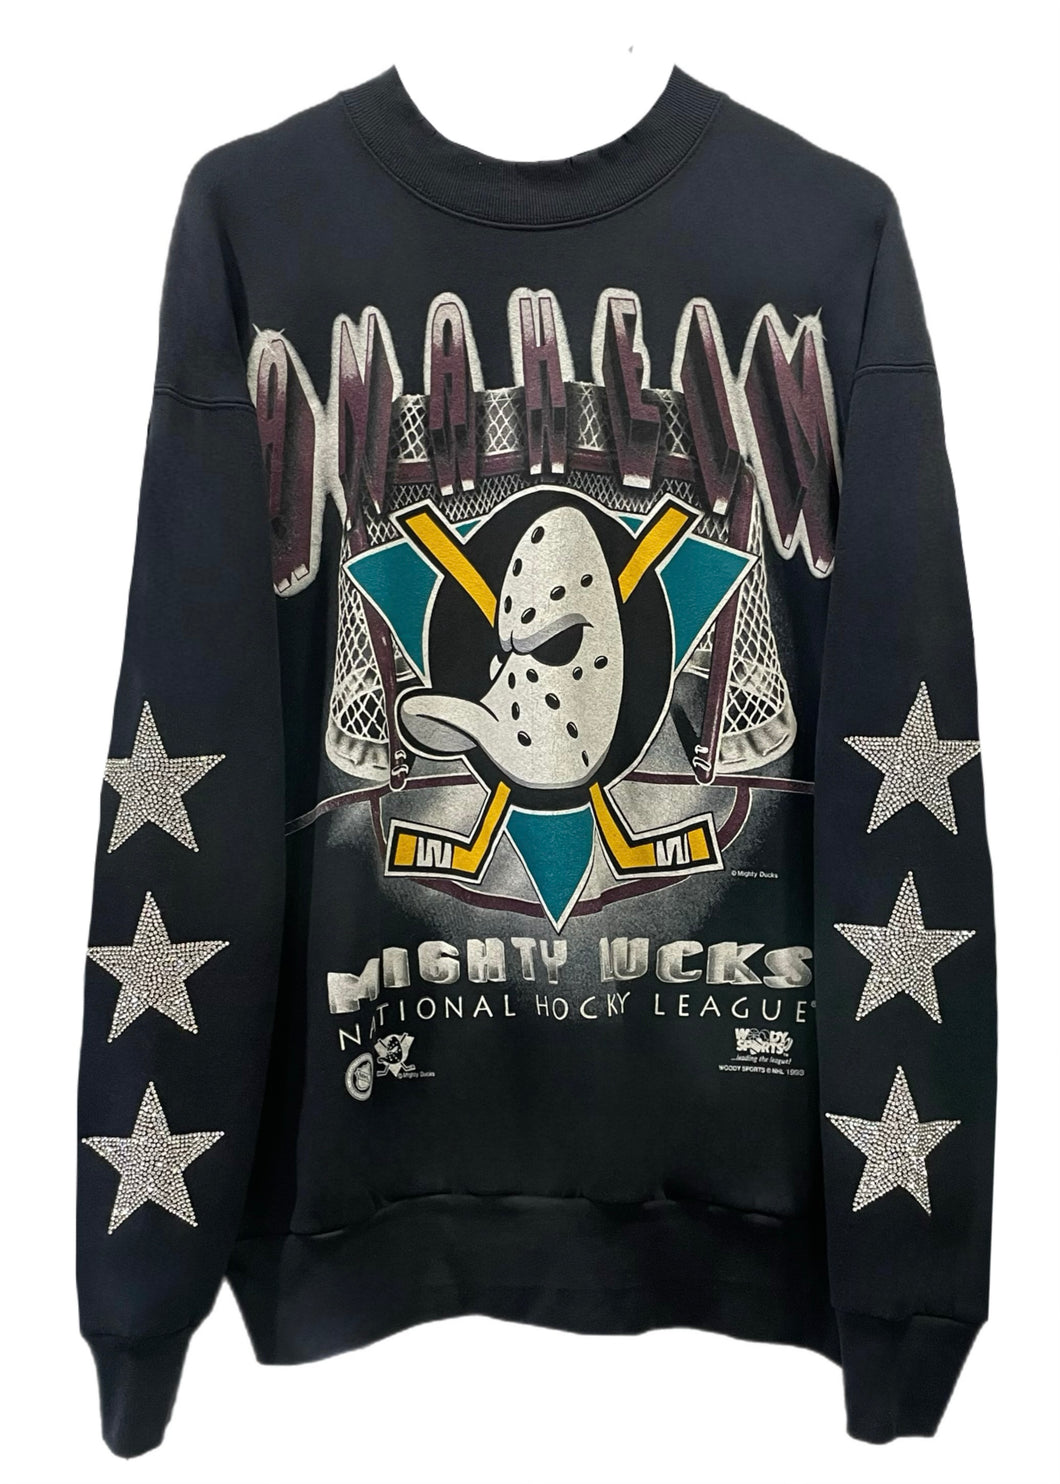 Anaheim Ducks, Hockey One of a KIND Vintage “Mighty Ducks” Super Rare Find 1993 Sweatshirt with Three Crystal Star Design